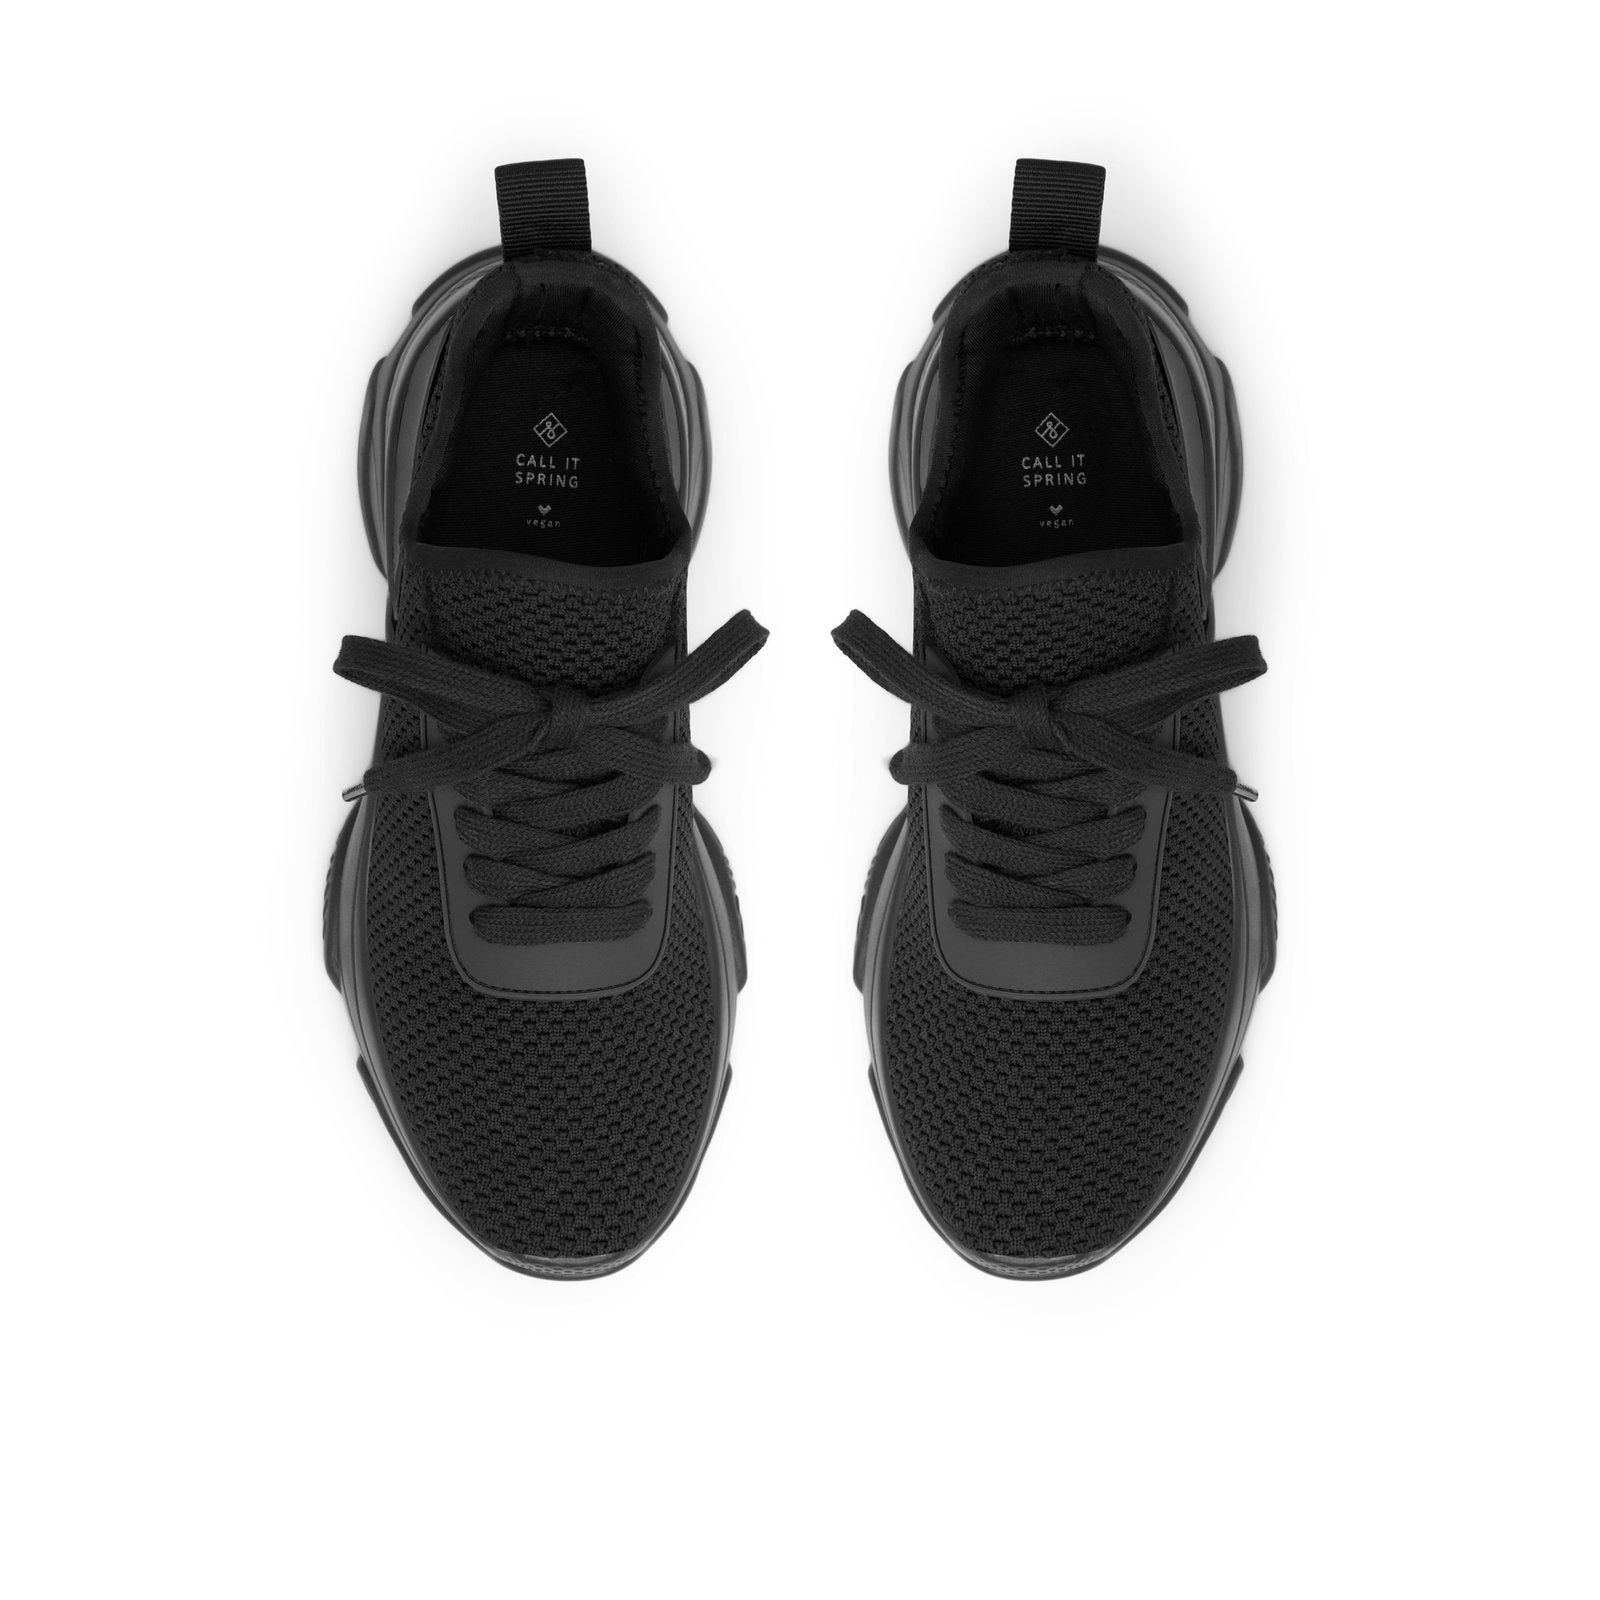 Lexii Women Shoes - Black - CALL IT SPRING KSA